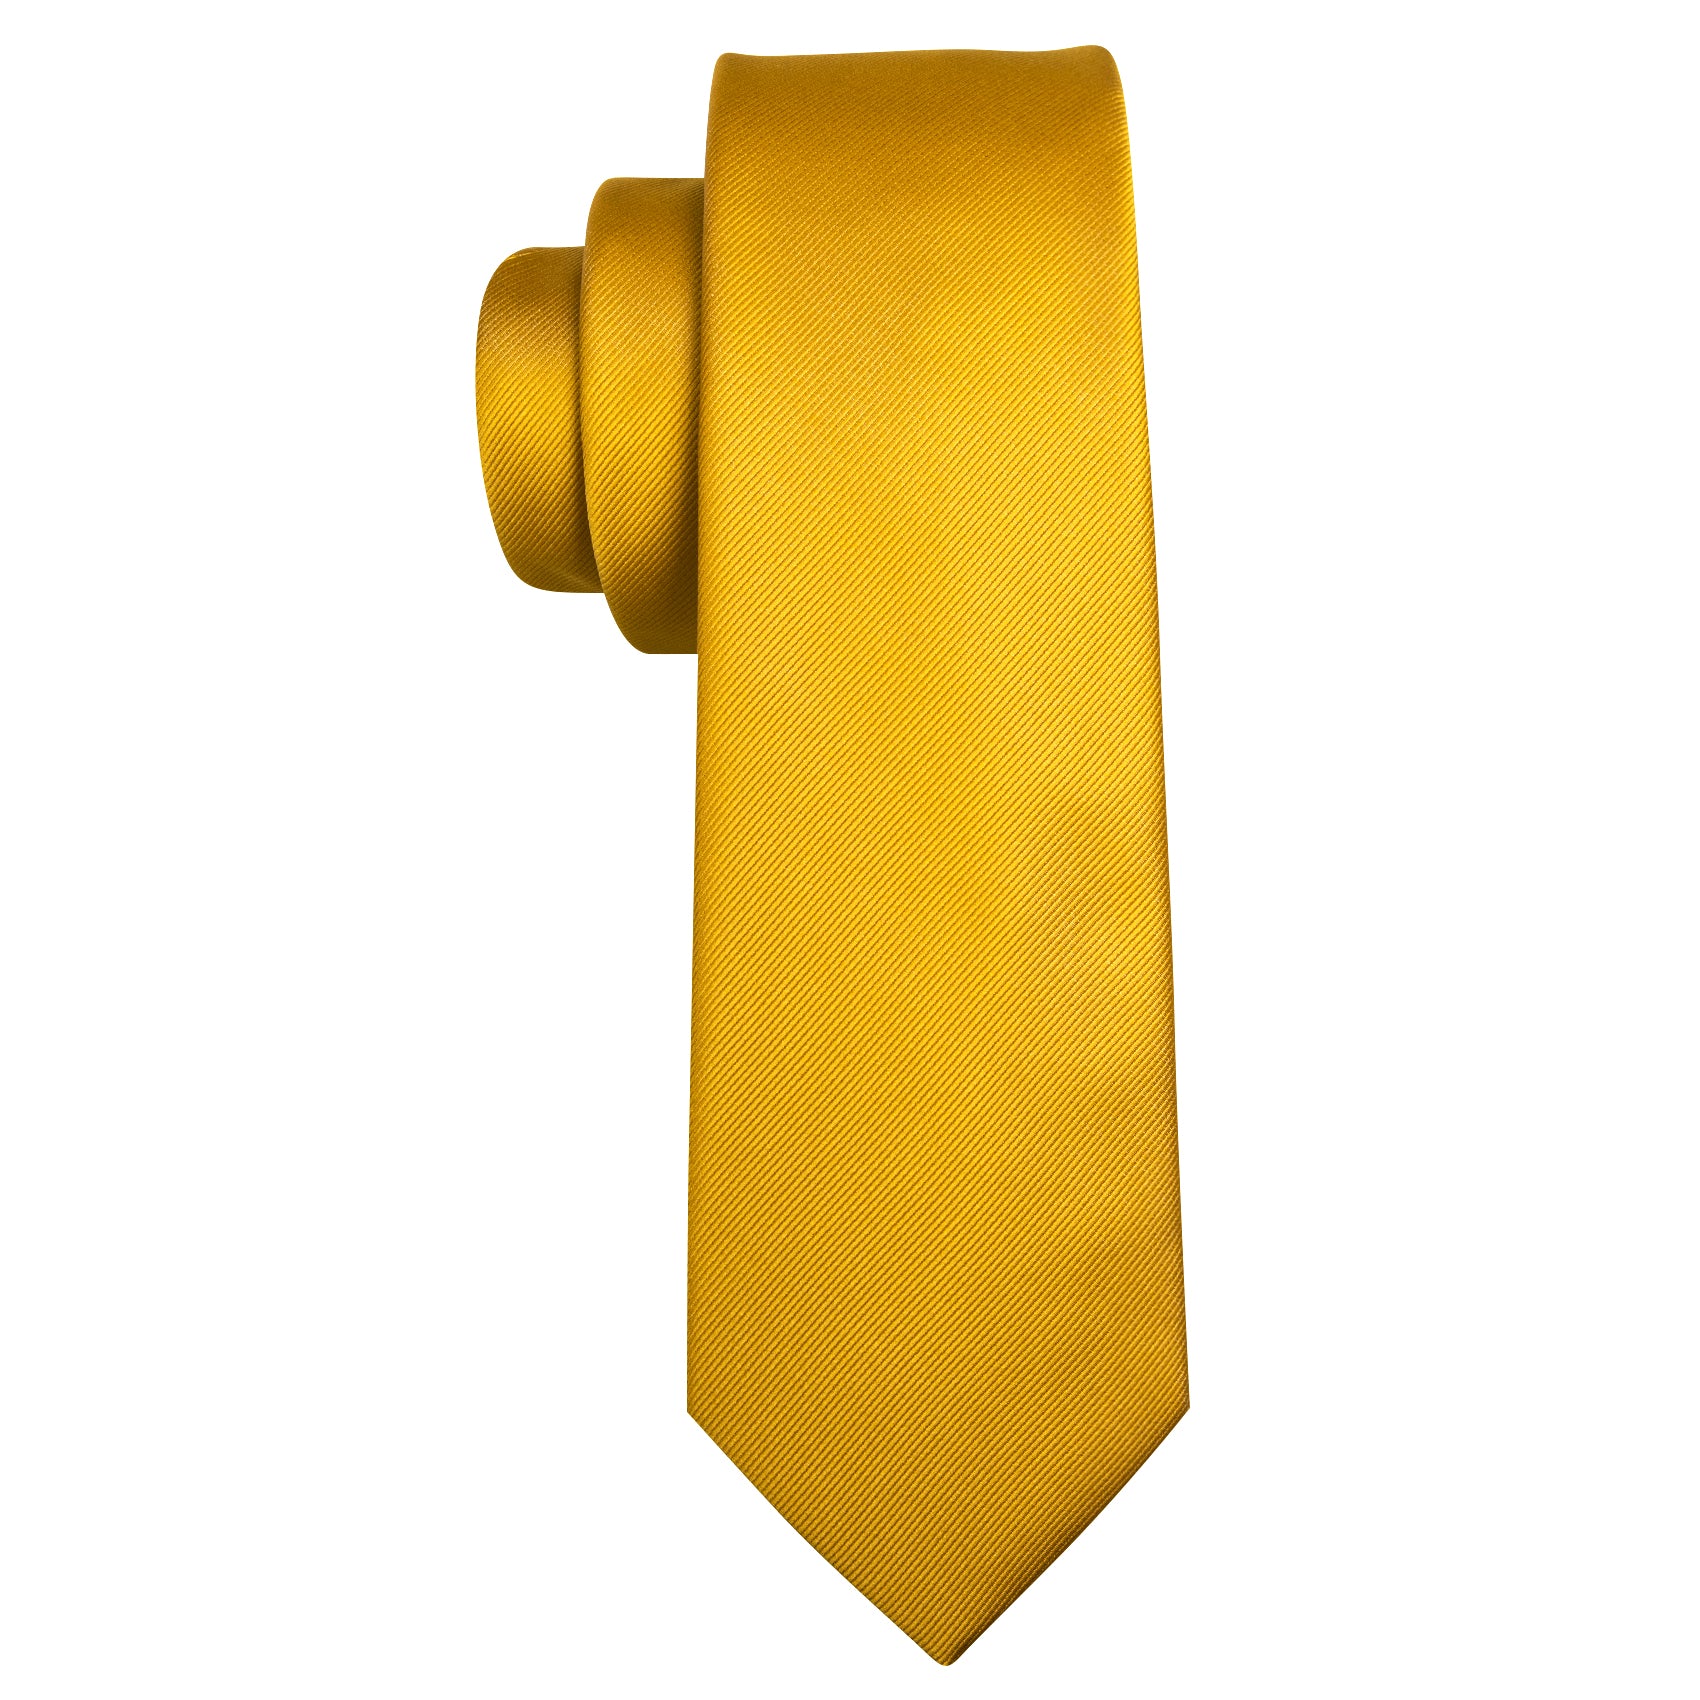 Gold Yellow Solid Silk Tie Pocket Square Cufflinks Set